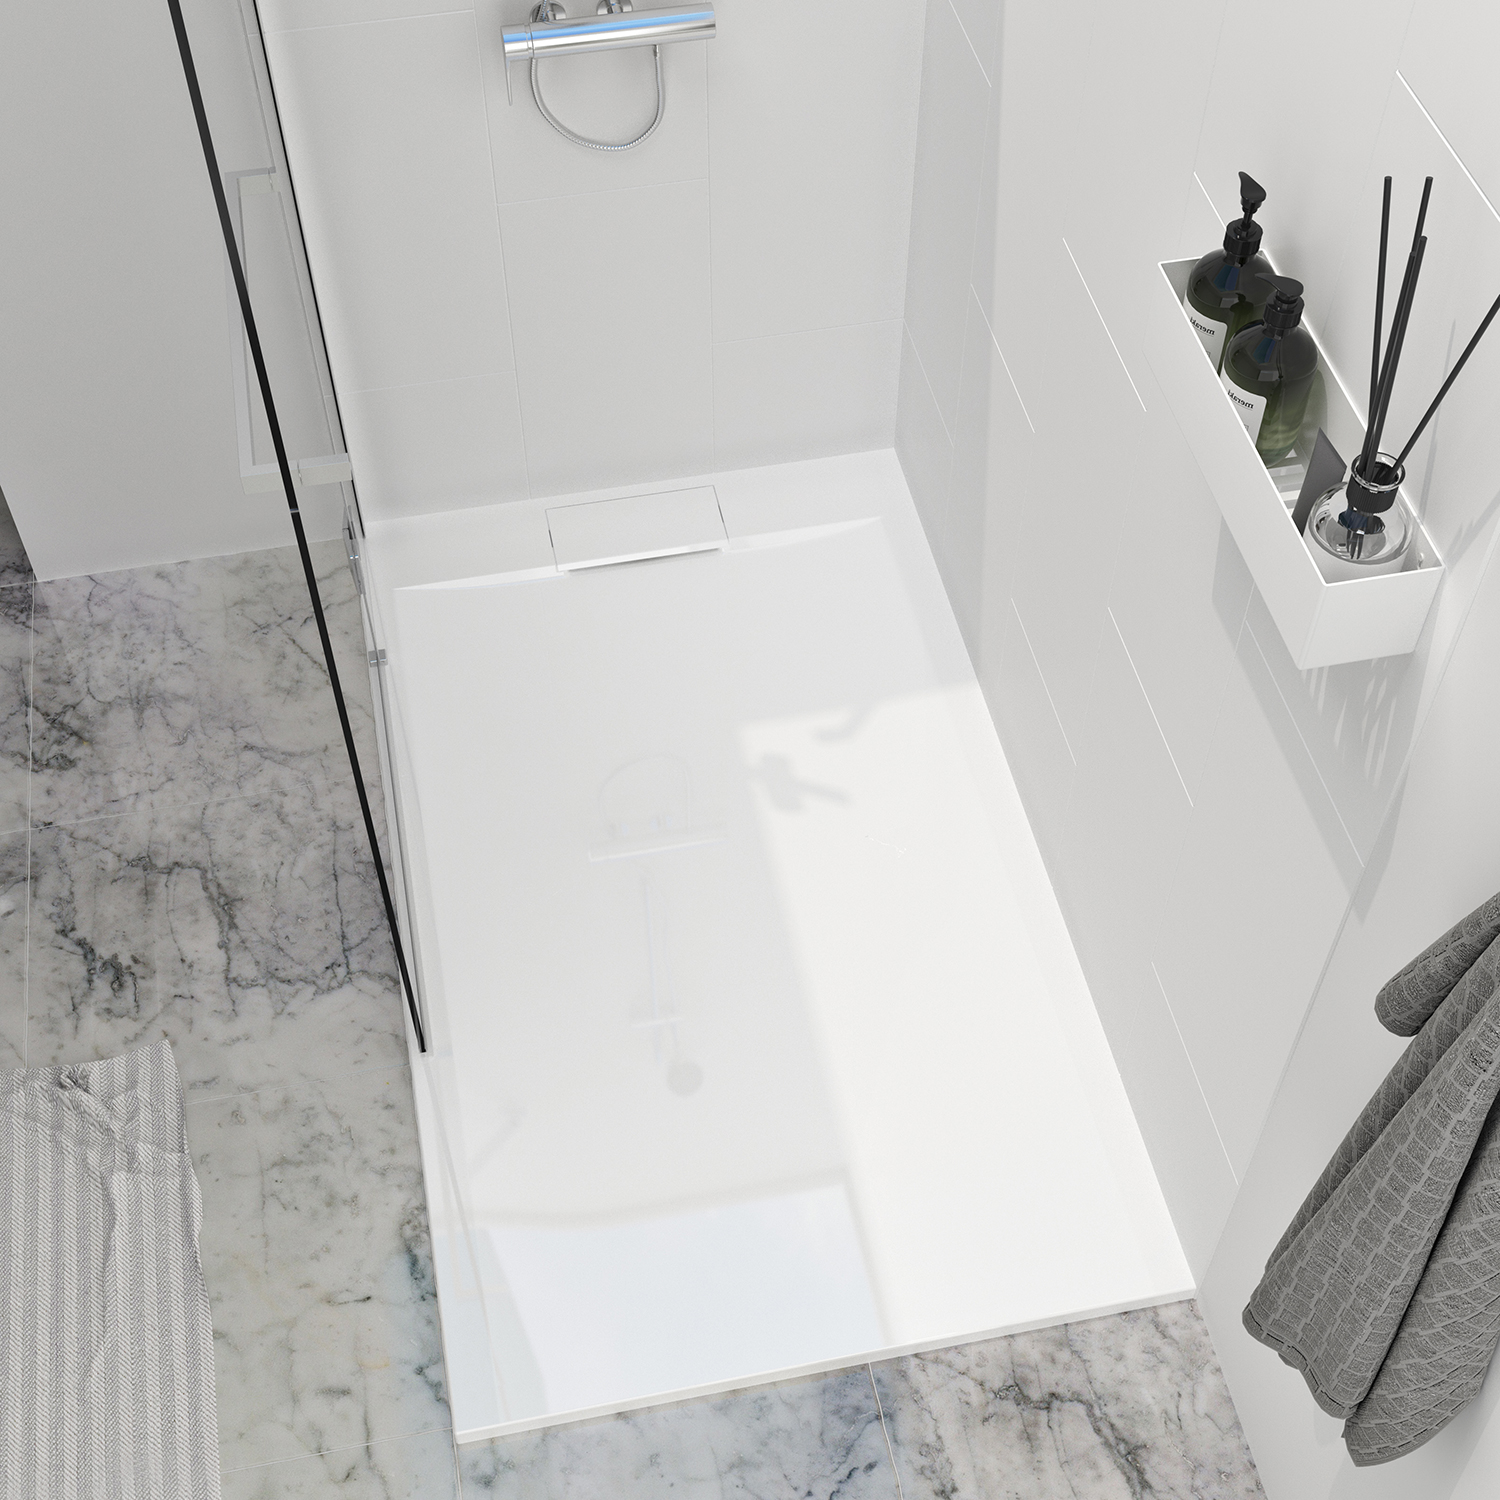 Shower base Liss 72 x 36, custom-made tile flange installation, in glossy white